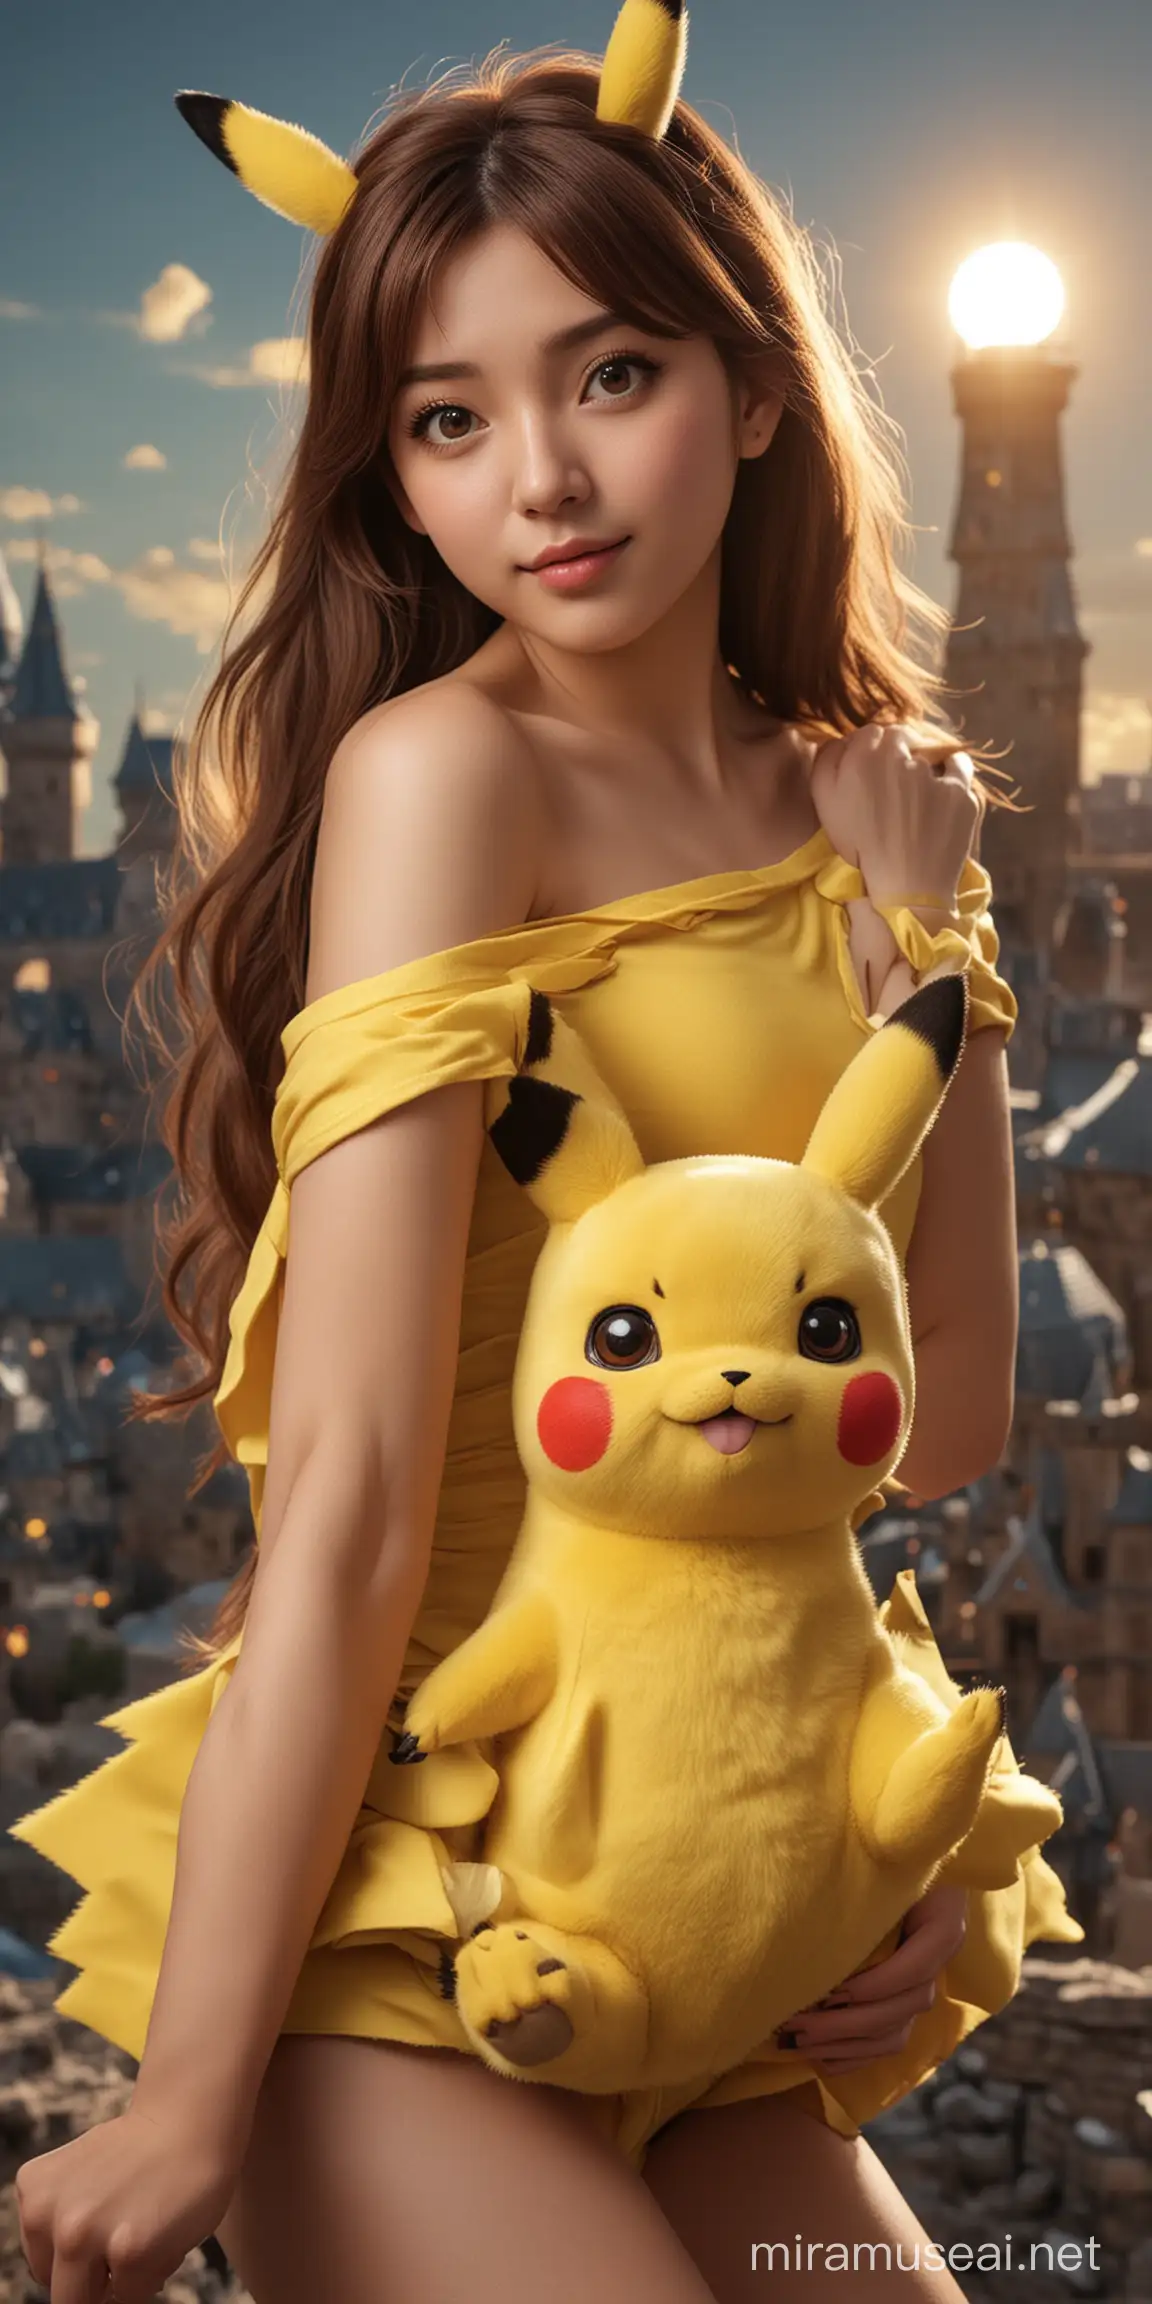 Gadis idol realistis yang sangat cantik, pikachu element superhero, background castle, pencahayaan lampu studio, foto studio yang sangat realistik, focused medium shot